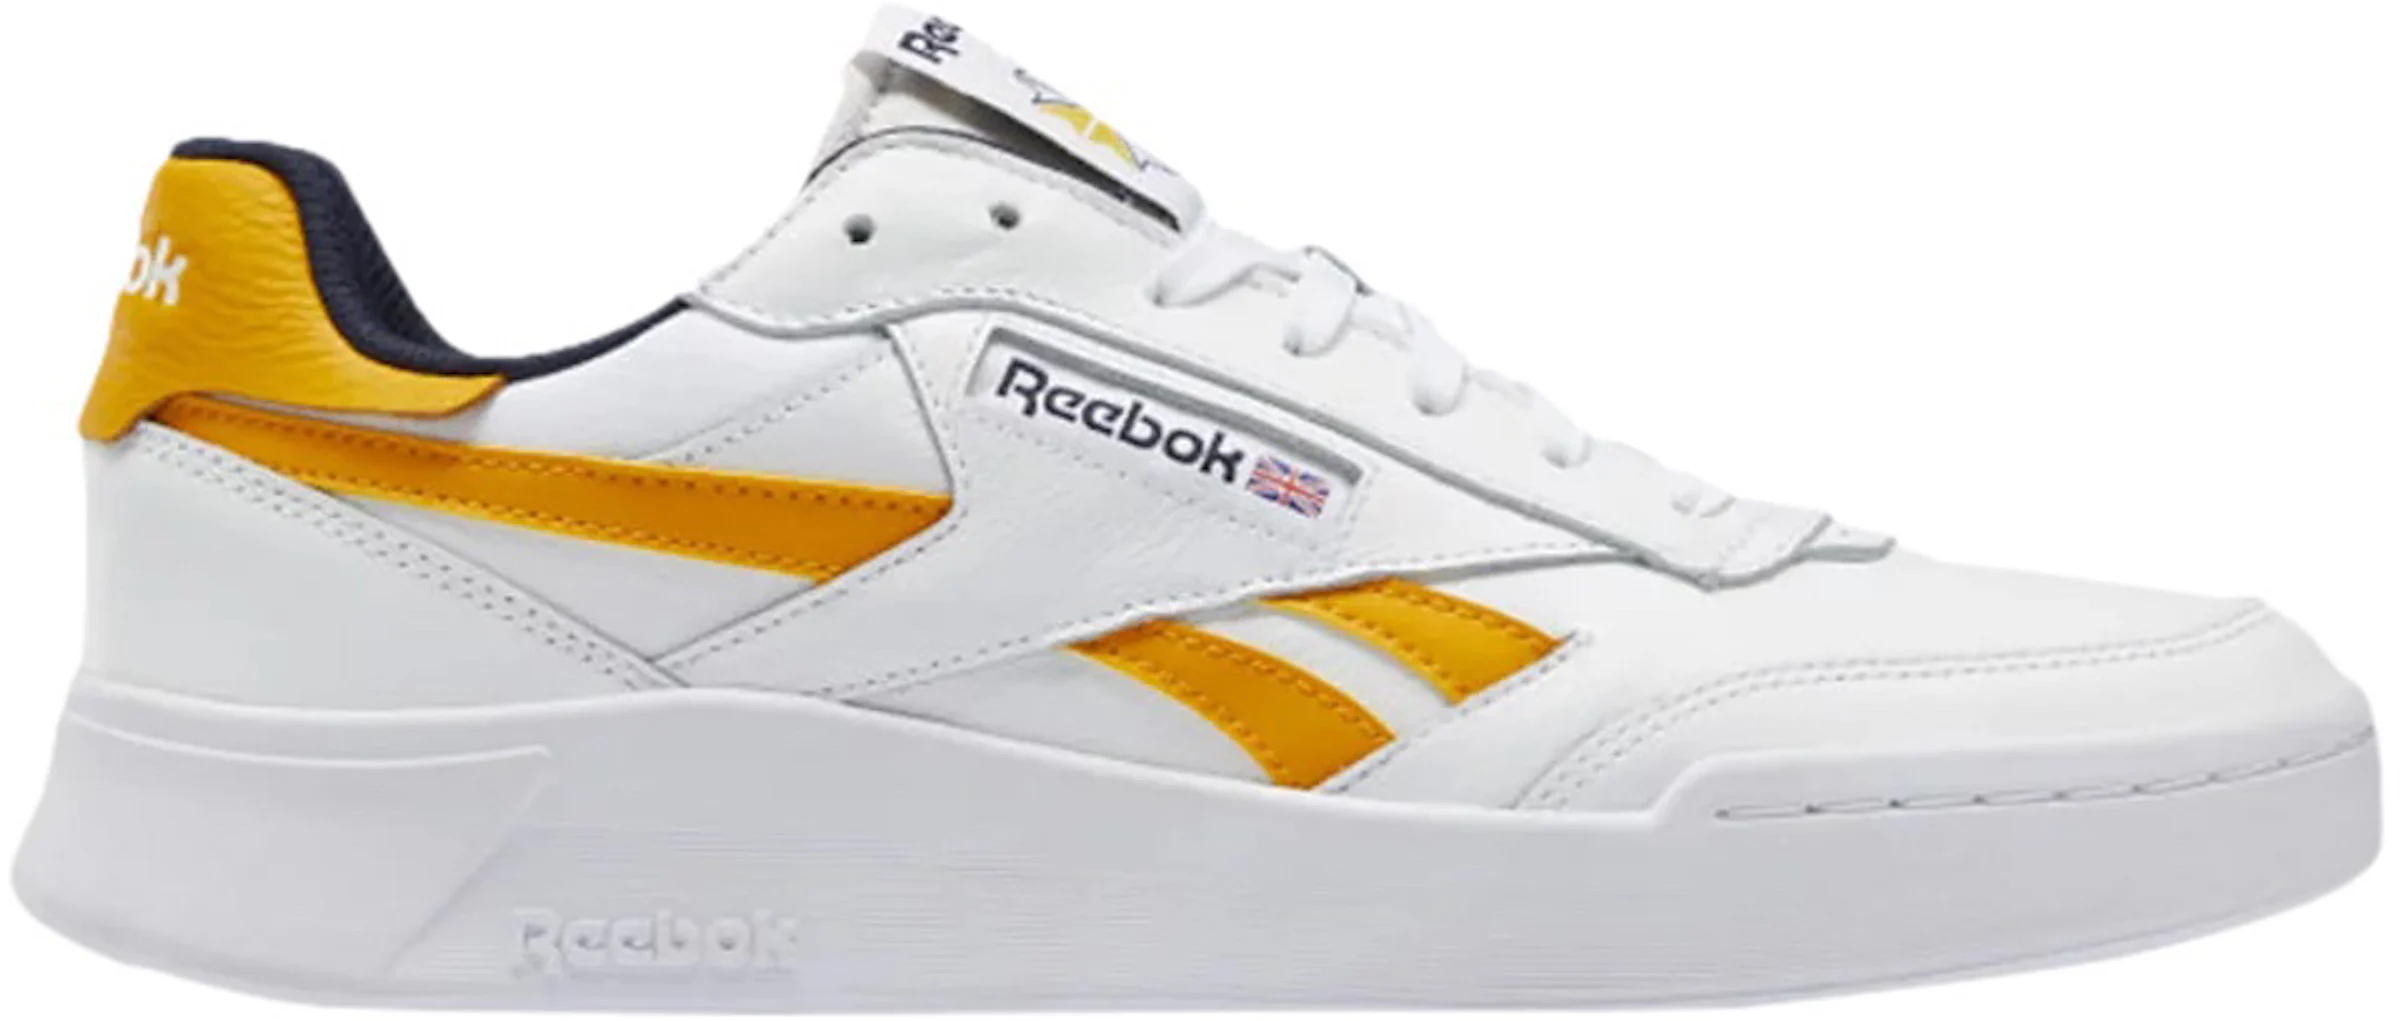 Mens Reebok Club C Revenge Athletic Shoe - White / Navy / Gold